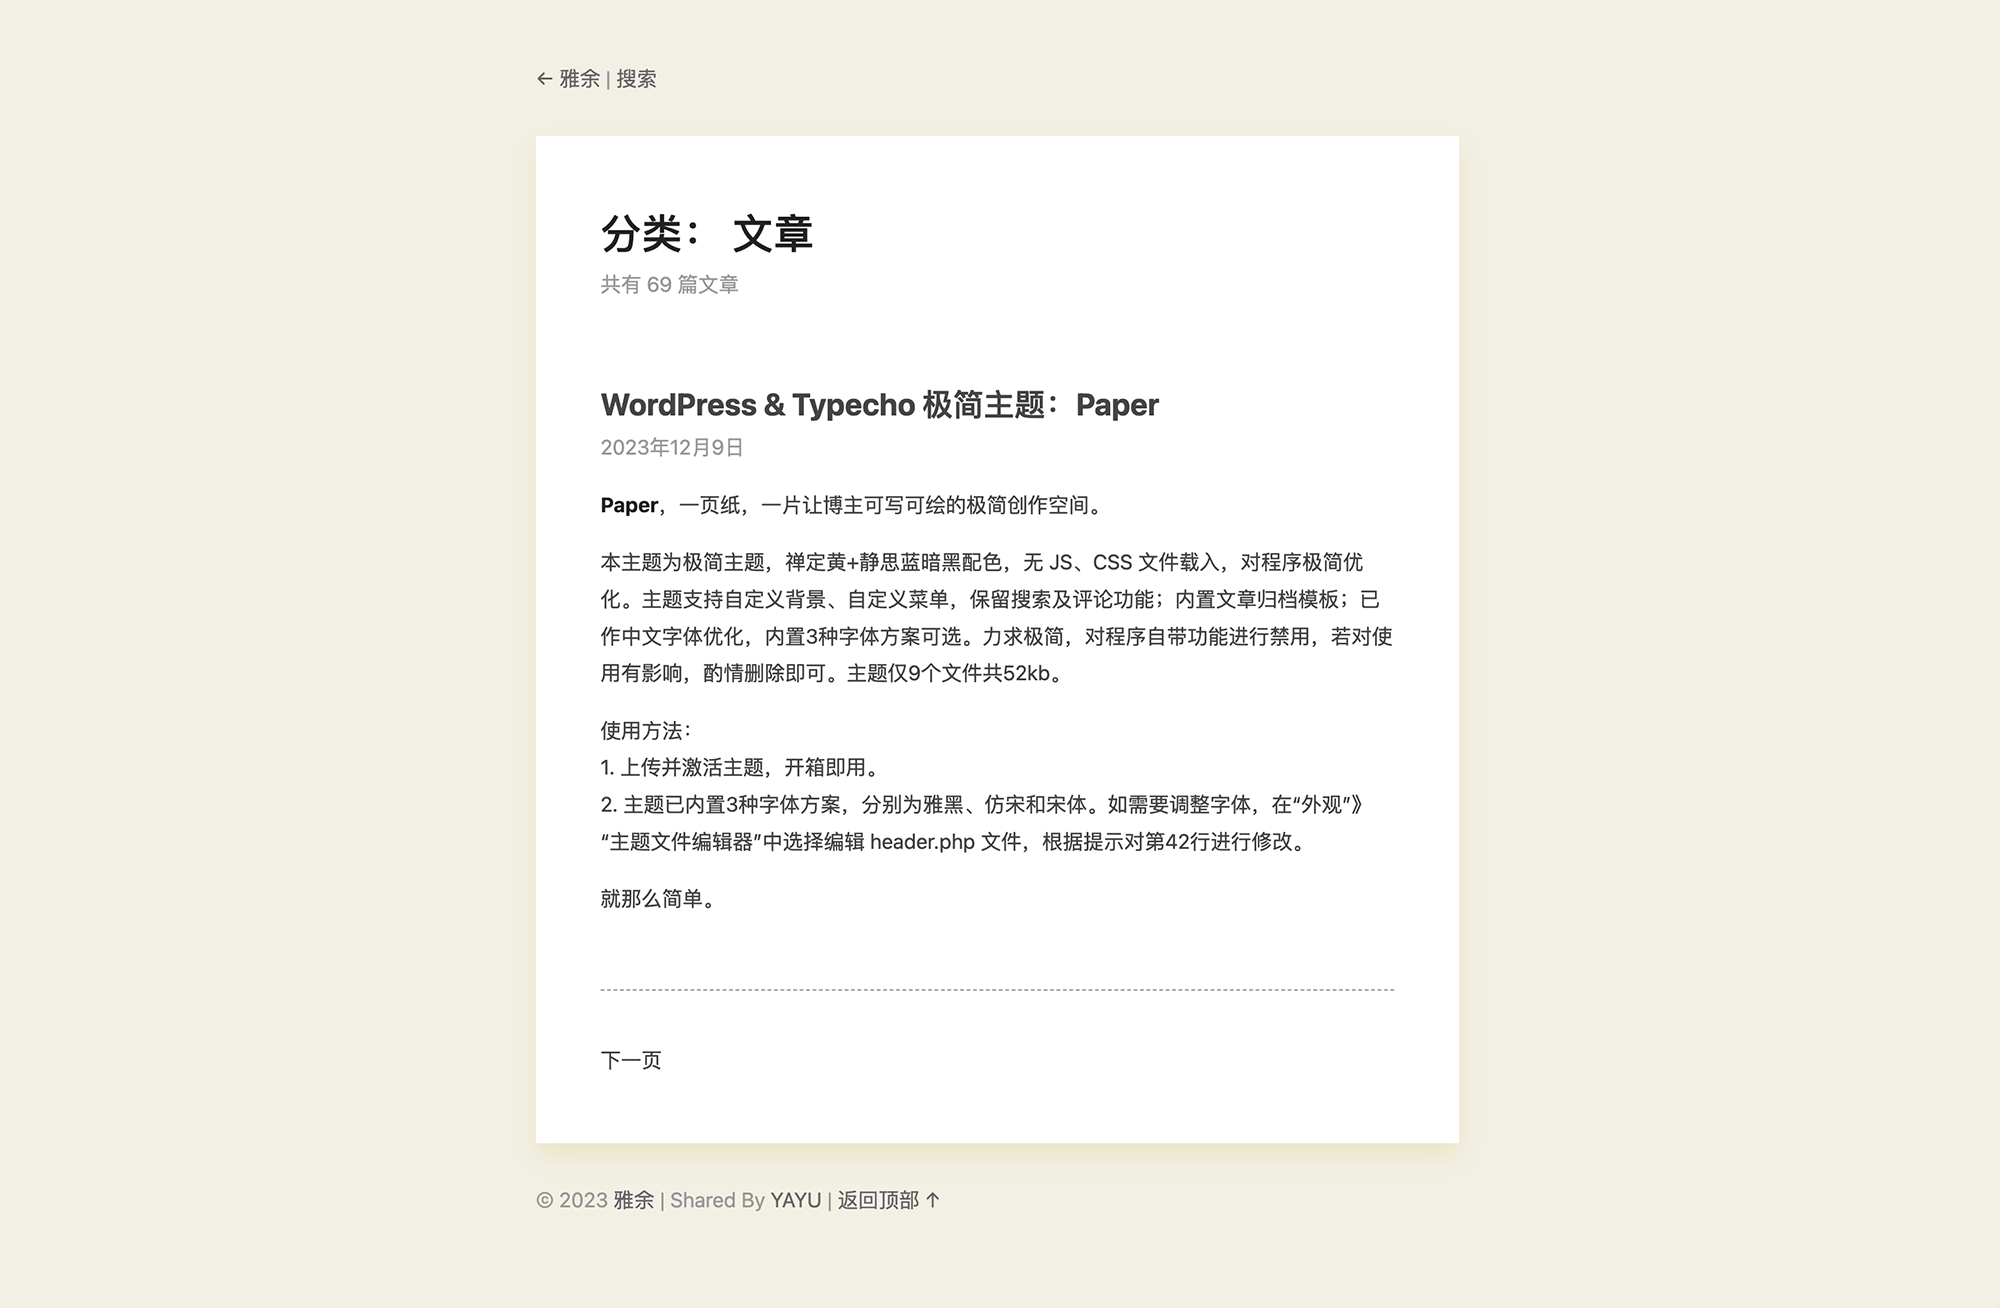 WordPress & Typecho 极简主题 Paper v1.0 发布-雅余